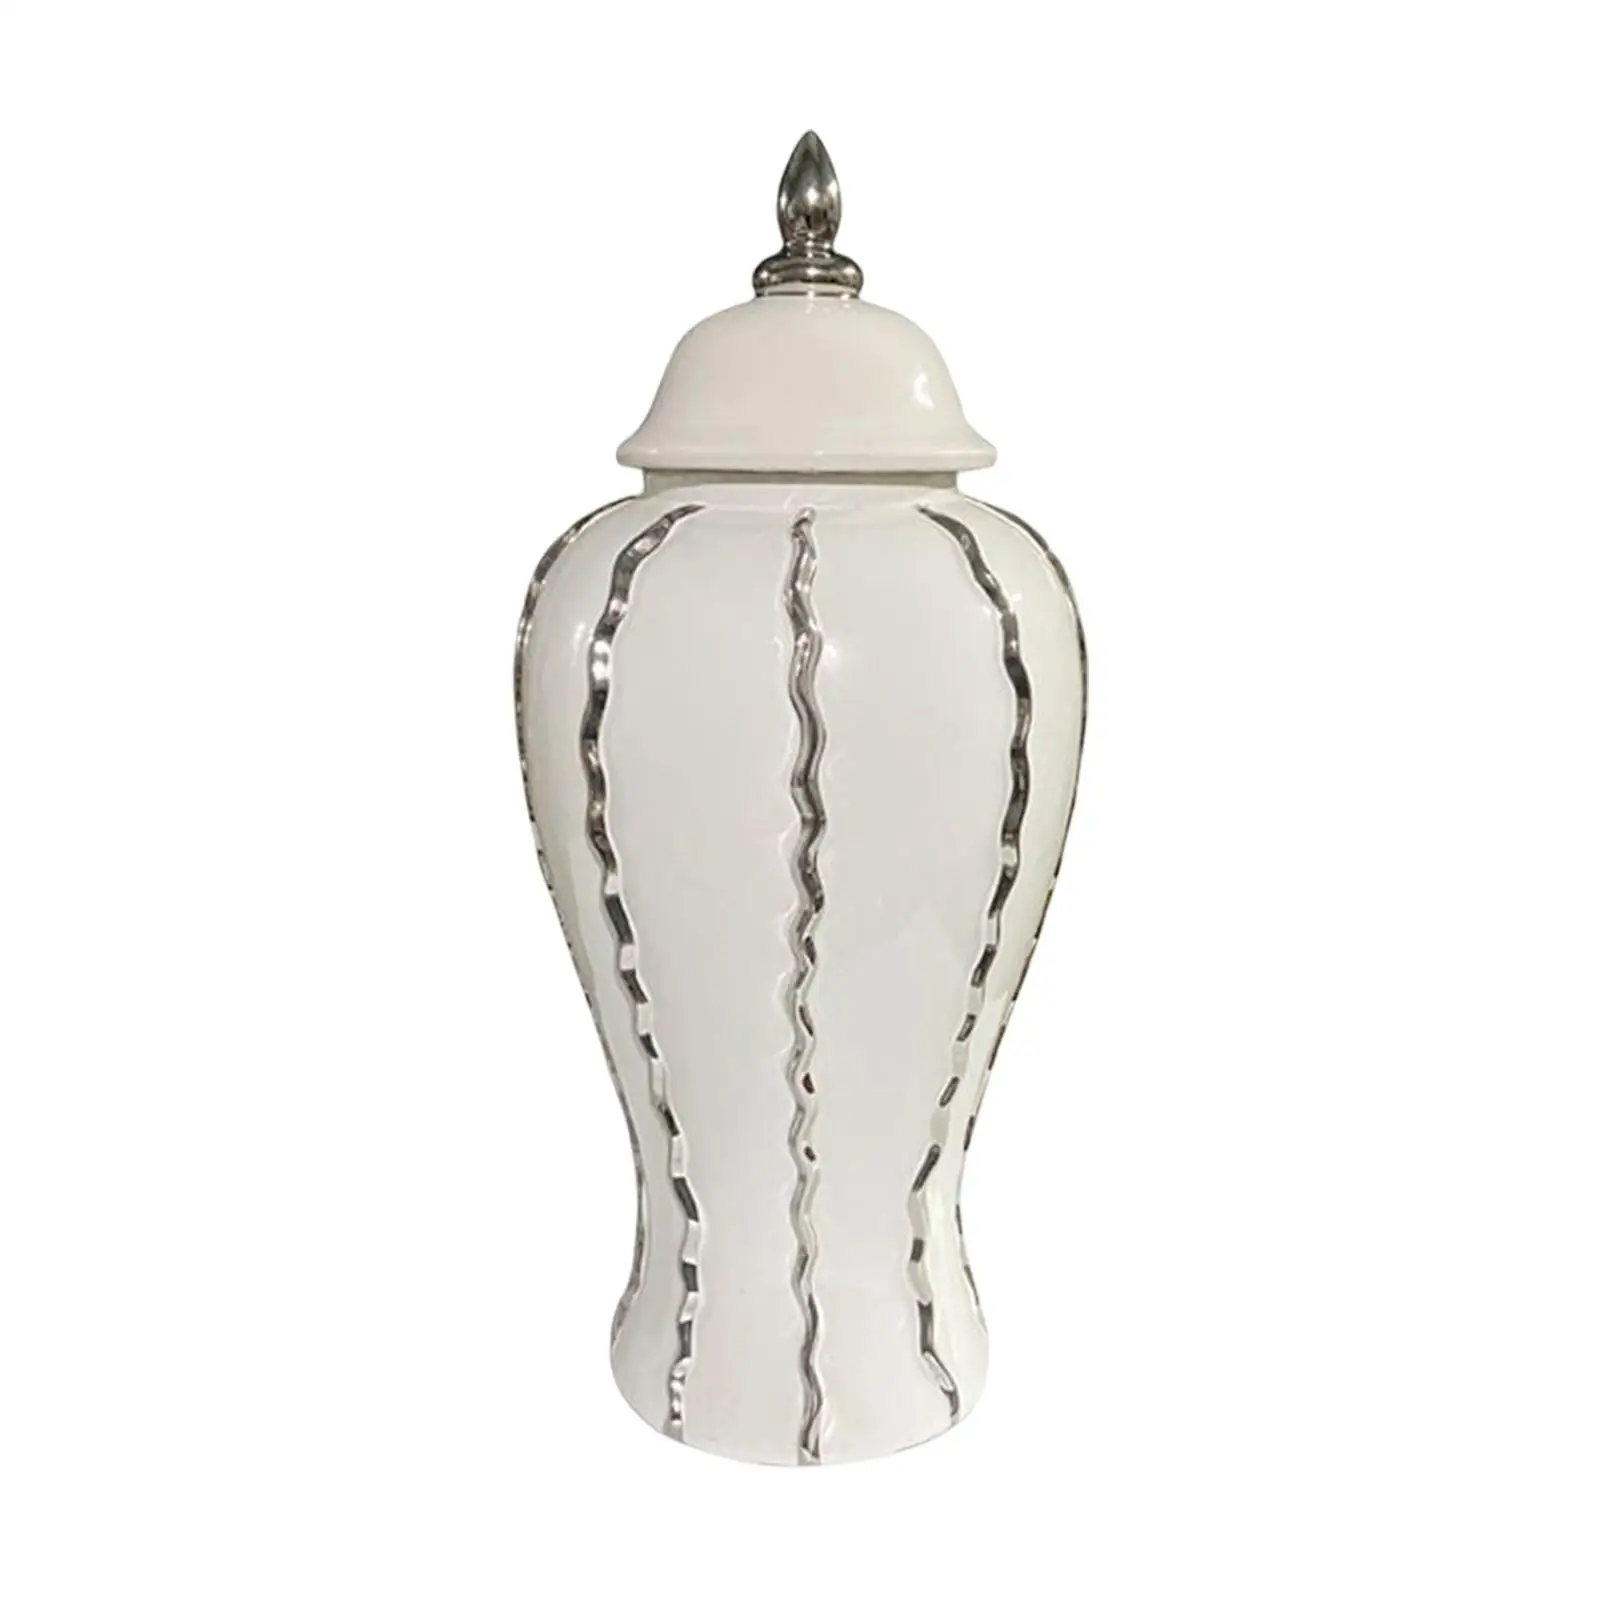 Ceramic Decorative Temple Jar Vase with Lid 7x13.8inch for Weddings, Party, Home Office Decor Centerpiece Floral Arrangement